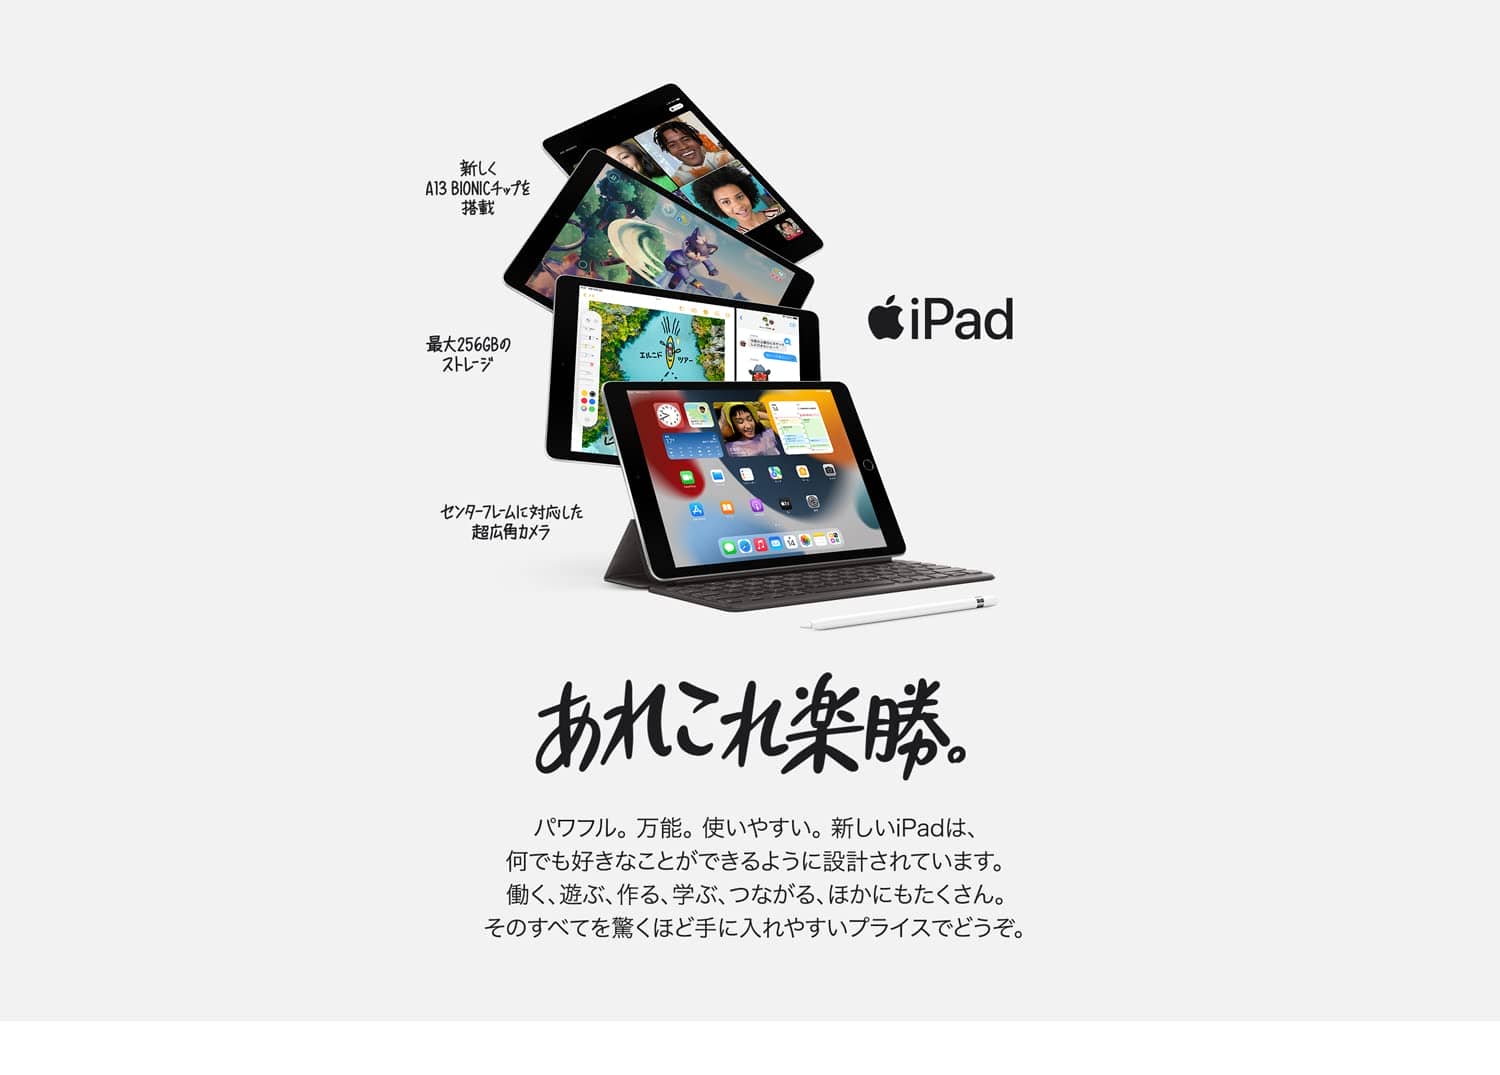 iPad COL Product Page L 23 hj leora ja JP AMZ 01. CB640731488